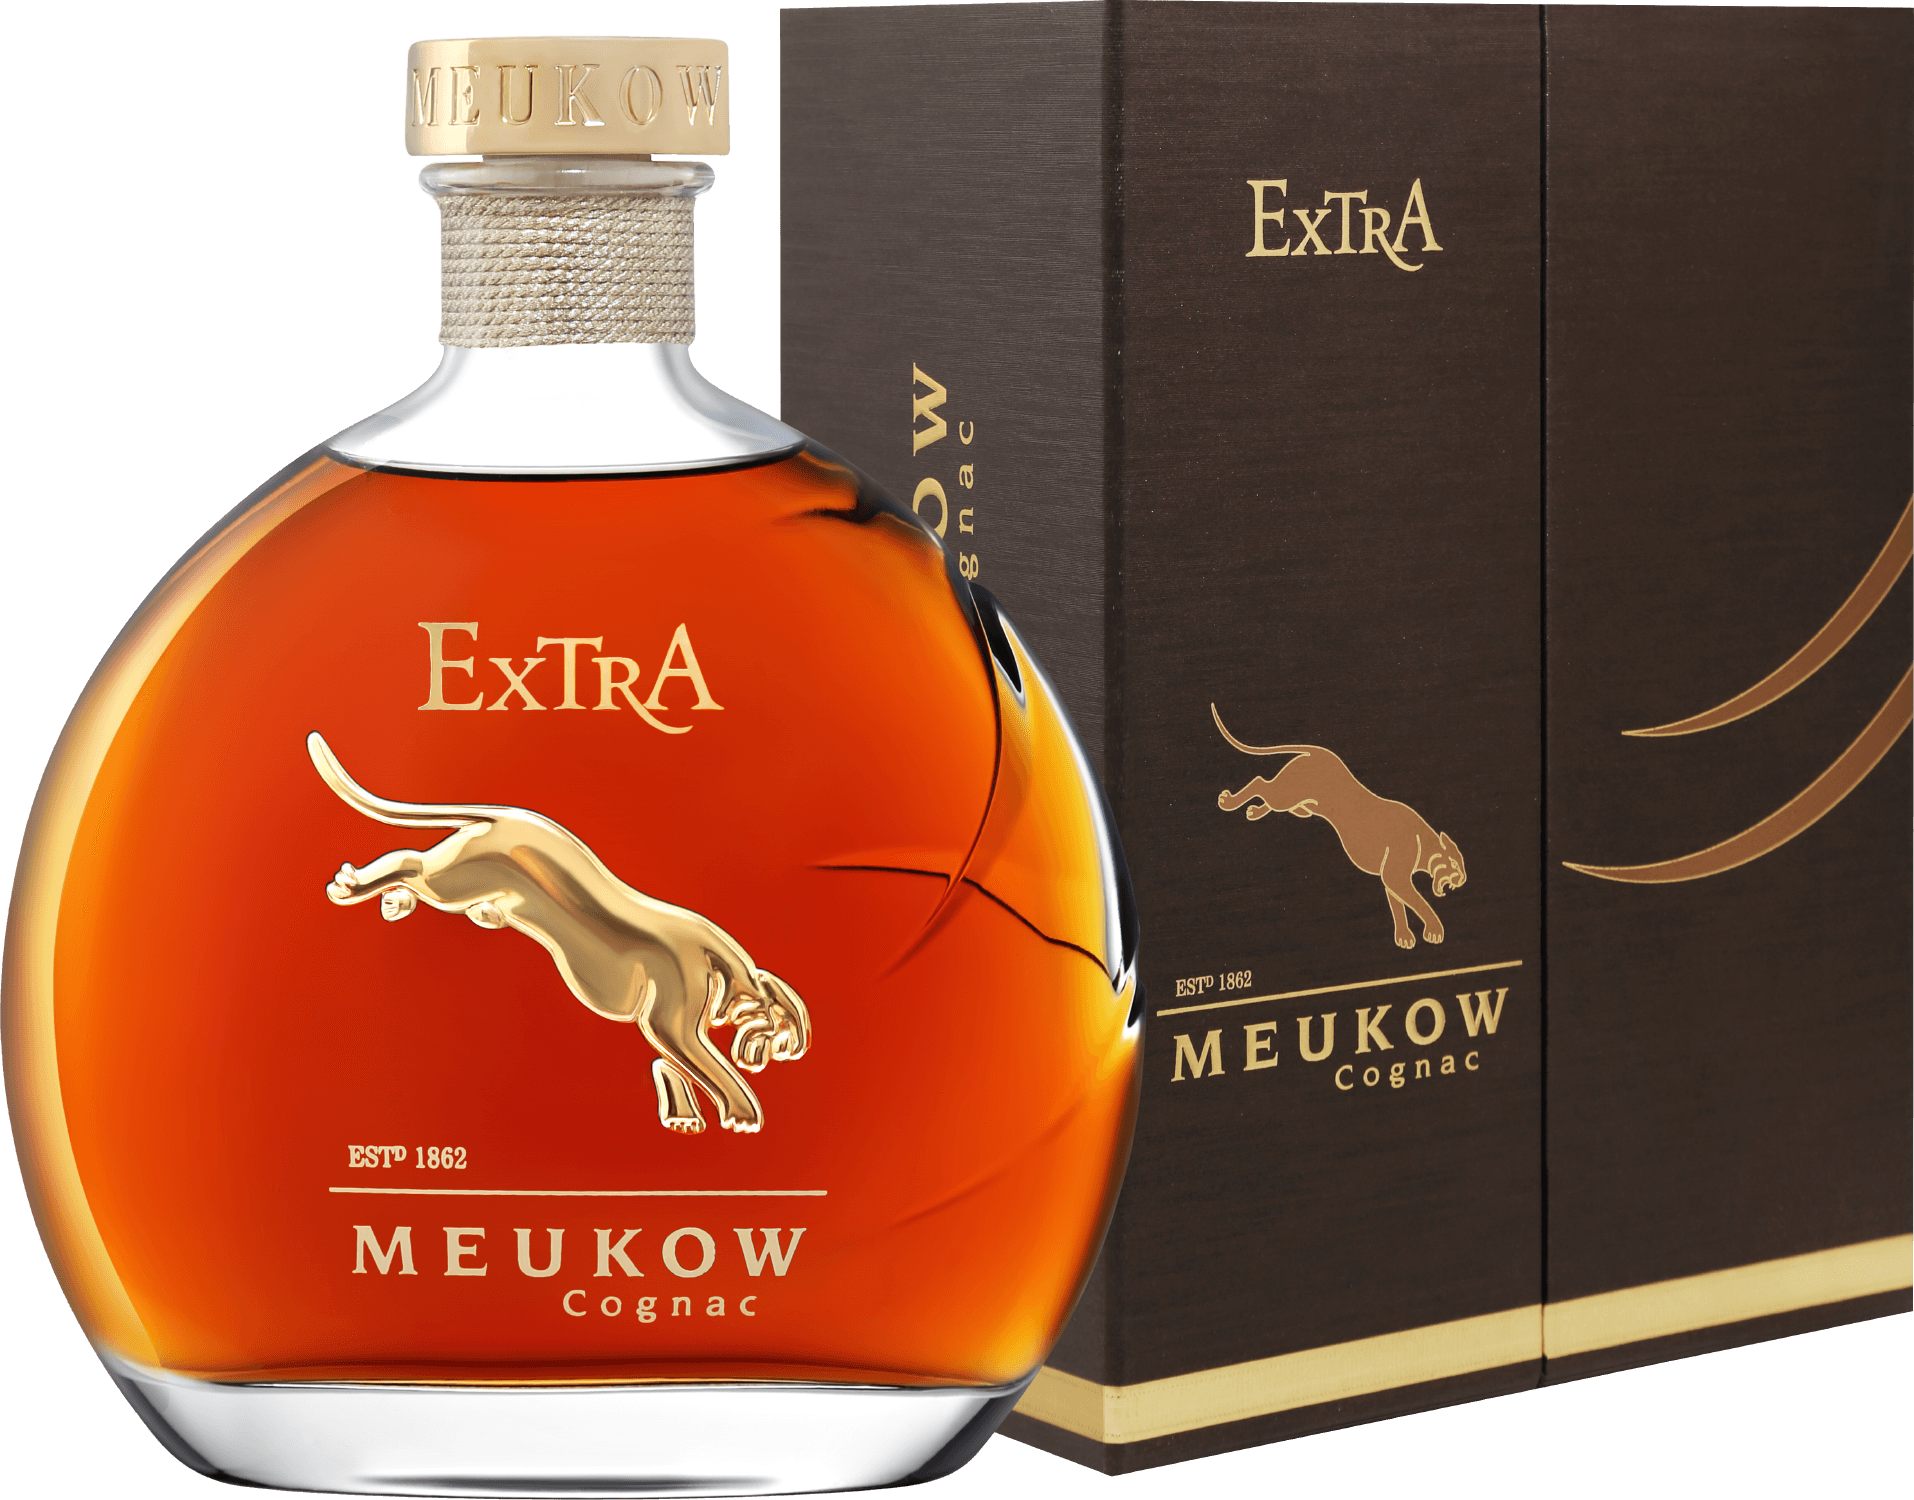 Meukow Cognac Extra (gift box) meukow cognac vs gift box